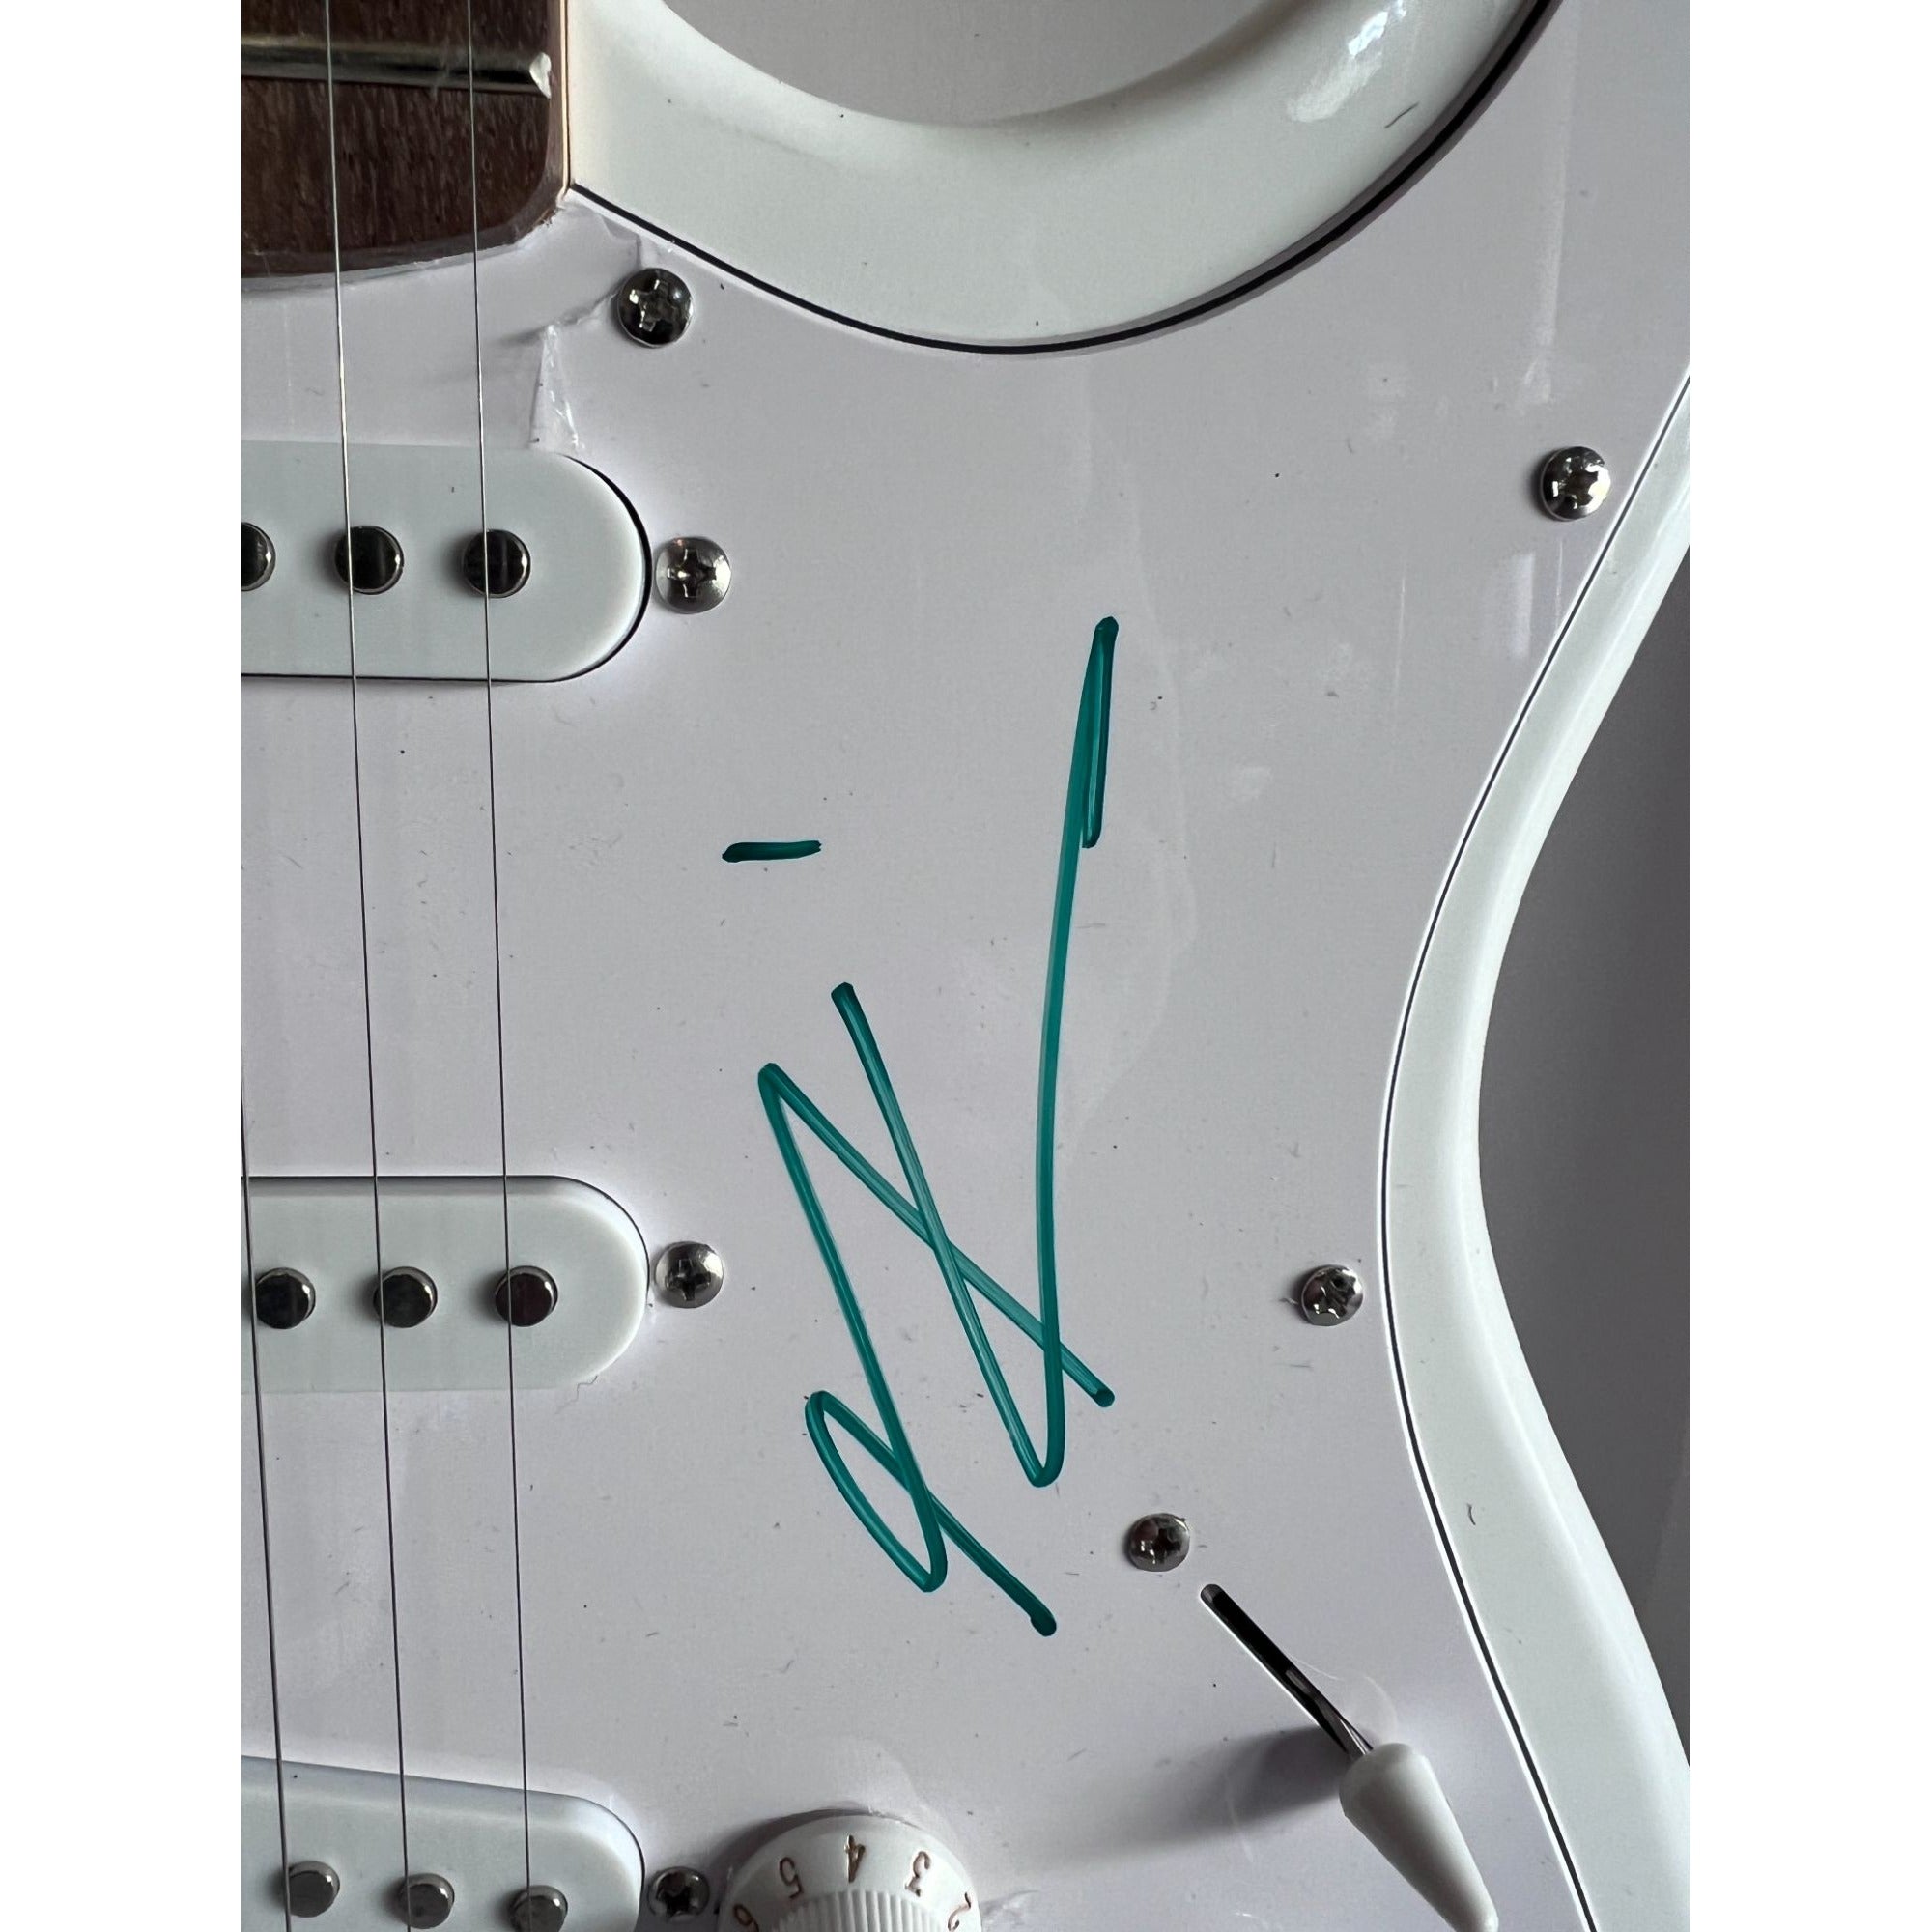 Tool James Maynard Keenan Danny Carey Adam Jones Justin Chancellor full size Stratocaster Electric guitar signed with proof